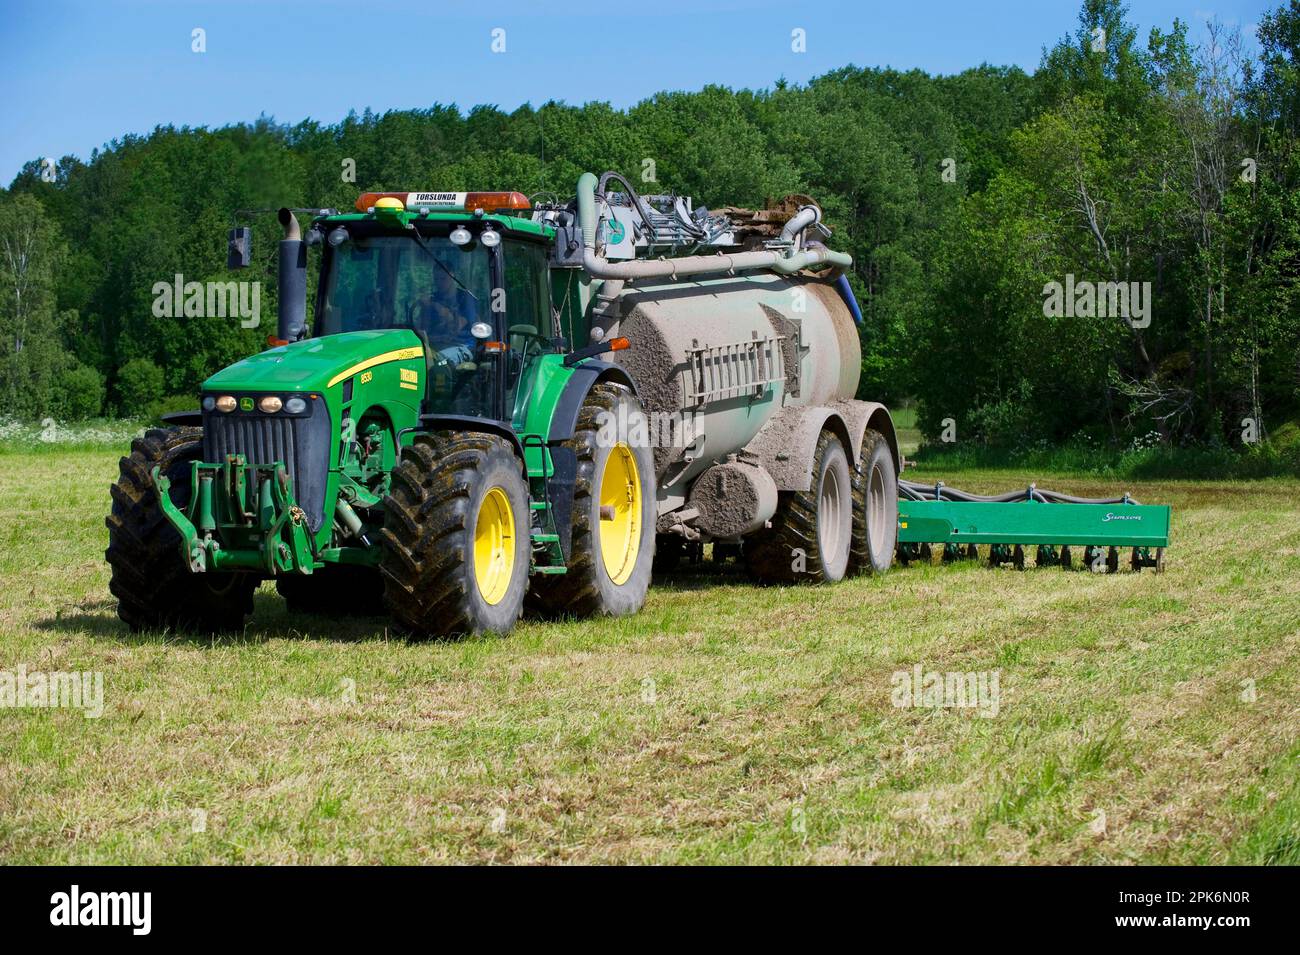 John Deere 8530 tractor with Samson vacuum slurry tanker and slurry injector, injecting slurry in the field, Alunda, Uppsala, Sweden Stock Photo